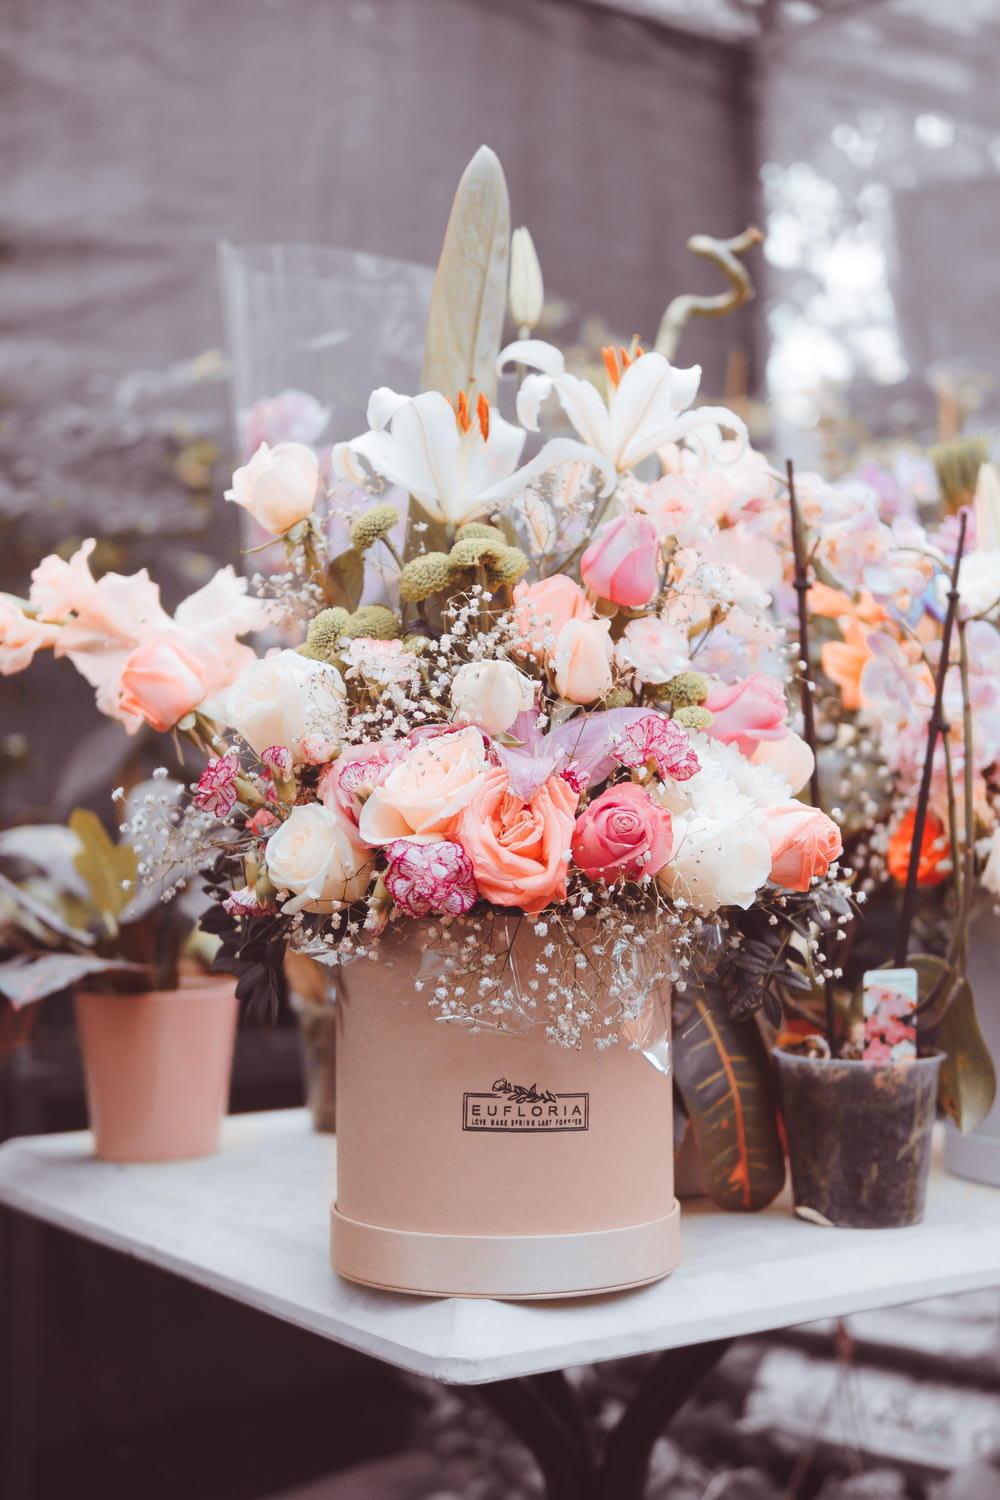 pink roses in vase